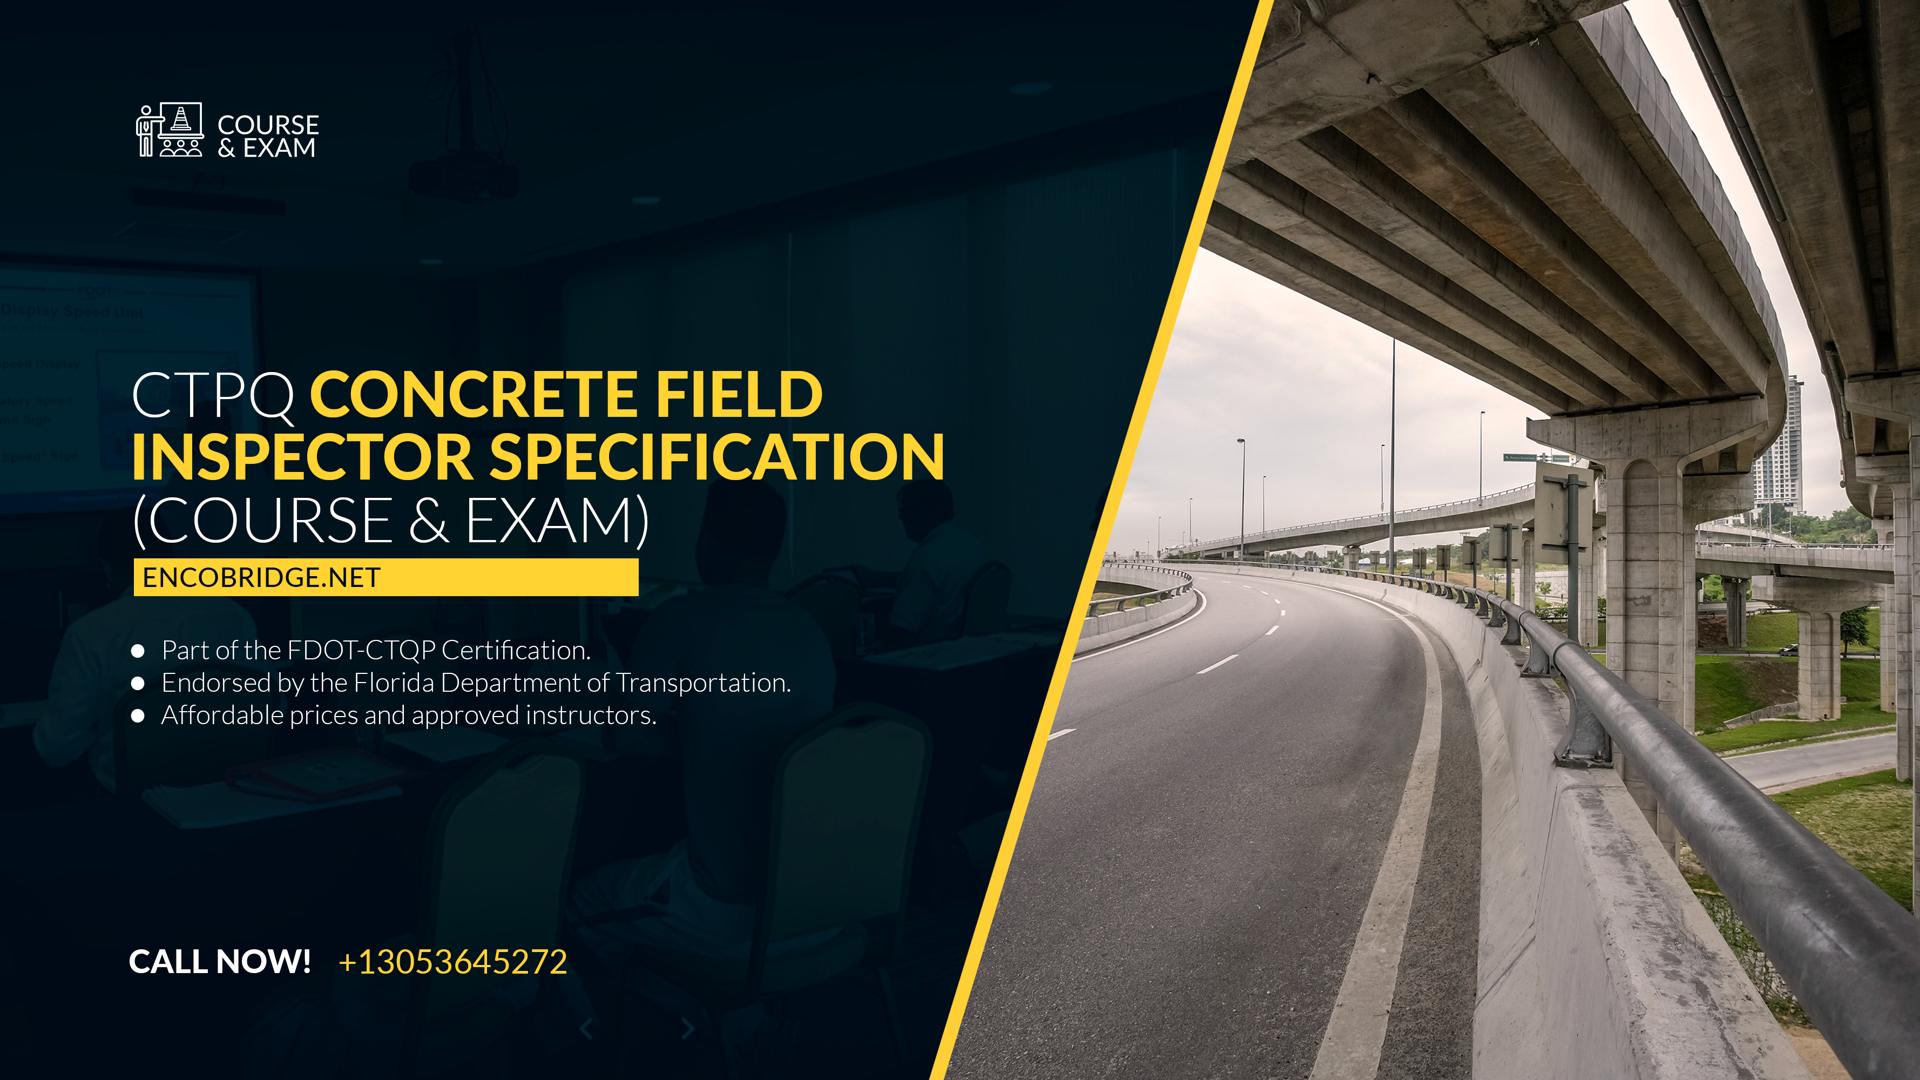 01 CTPQ Concrete Field Inspector Specification - Course & Exam